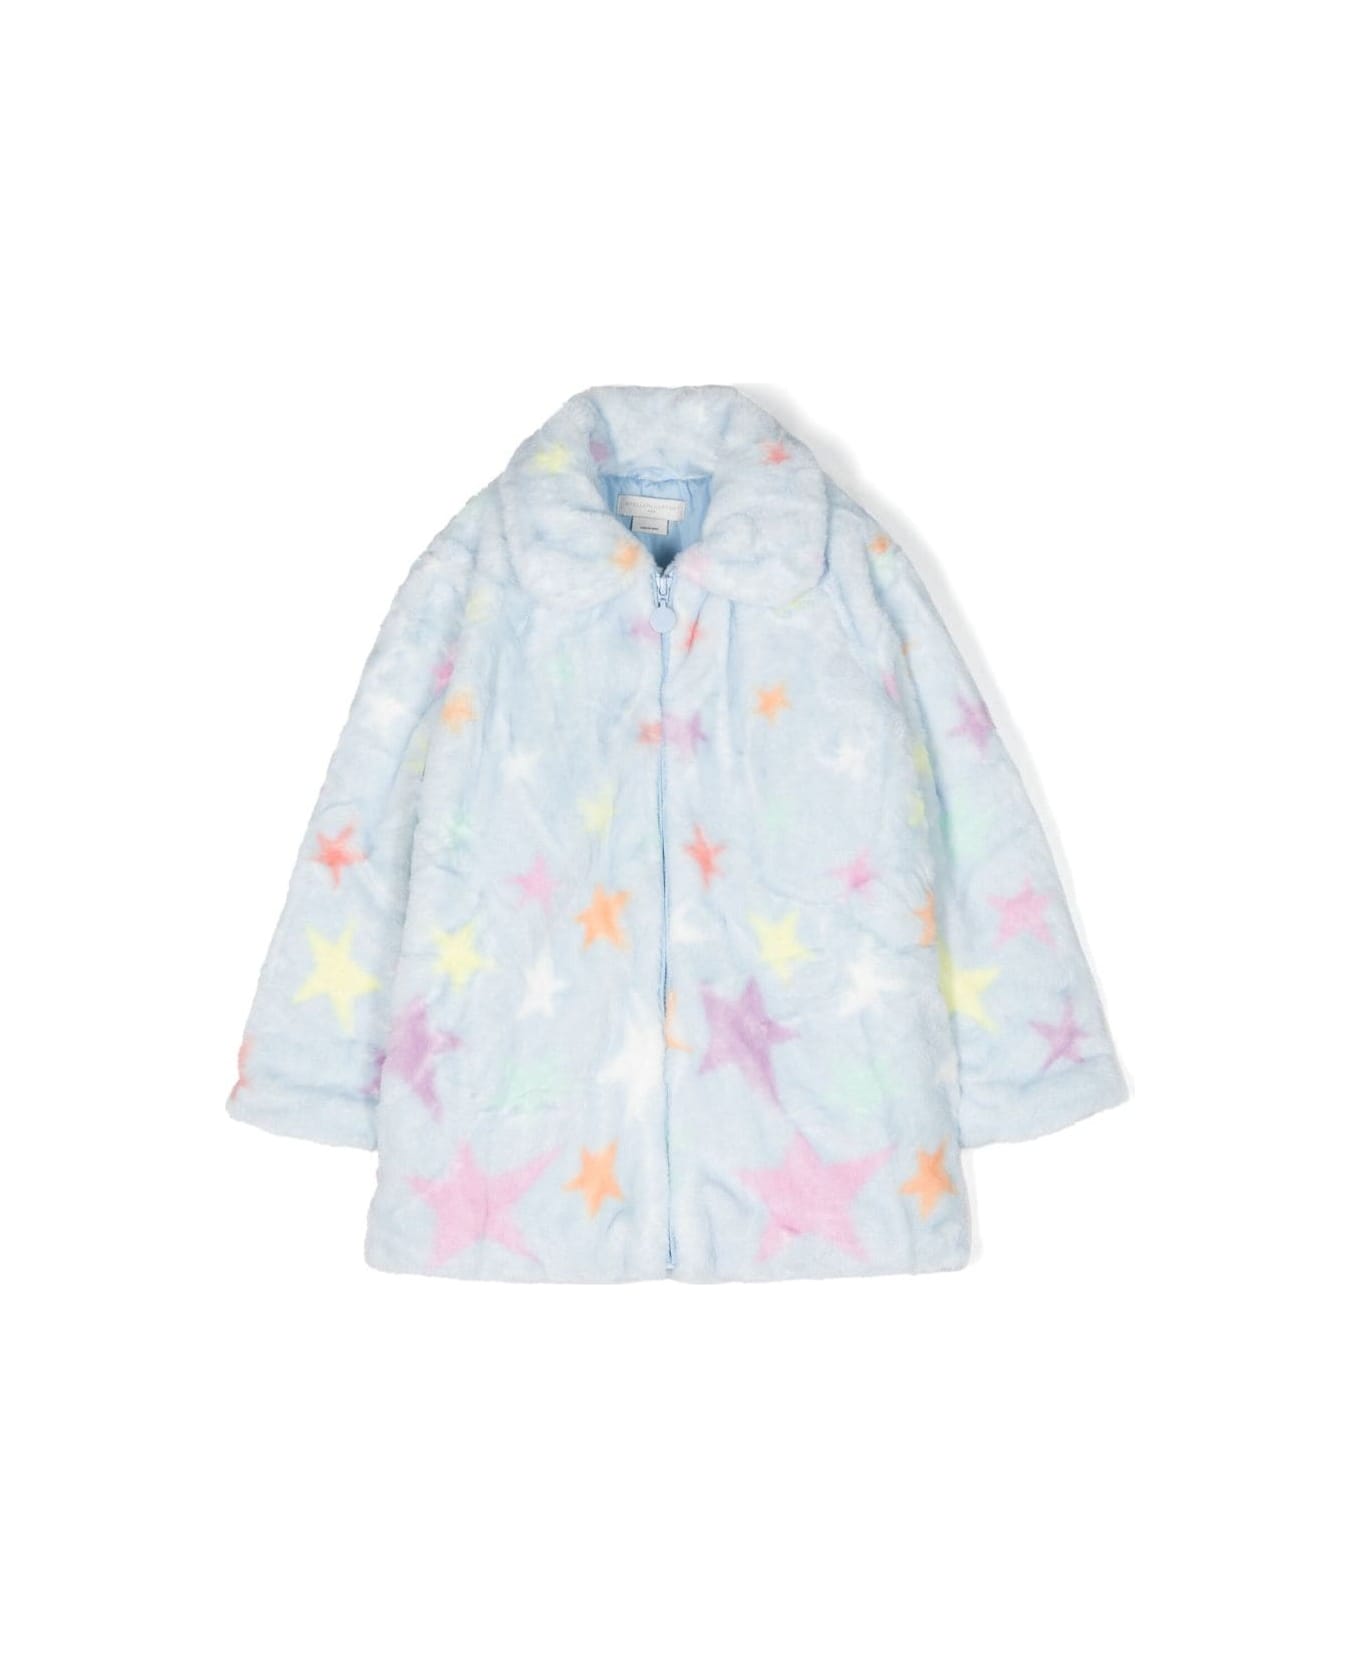 Stella McCartney Kids Light Blue Coat With Multicolor Star Print In Fabric Girl - Multicolor